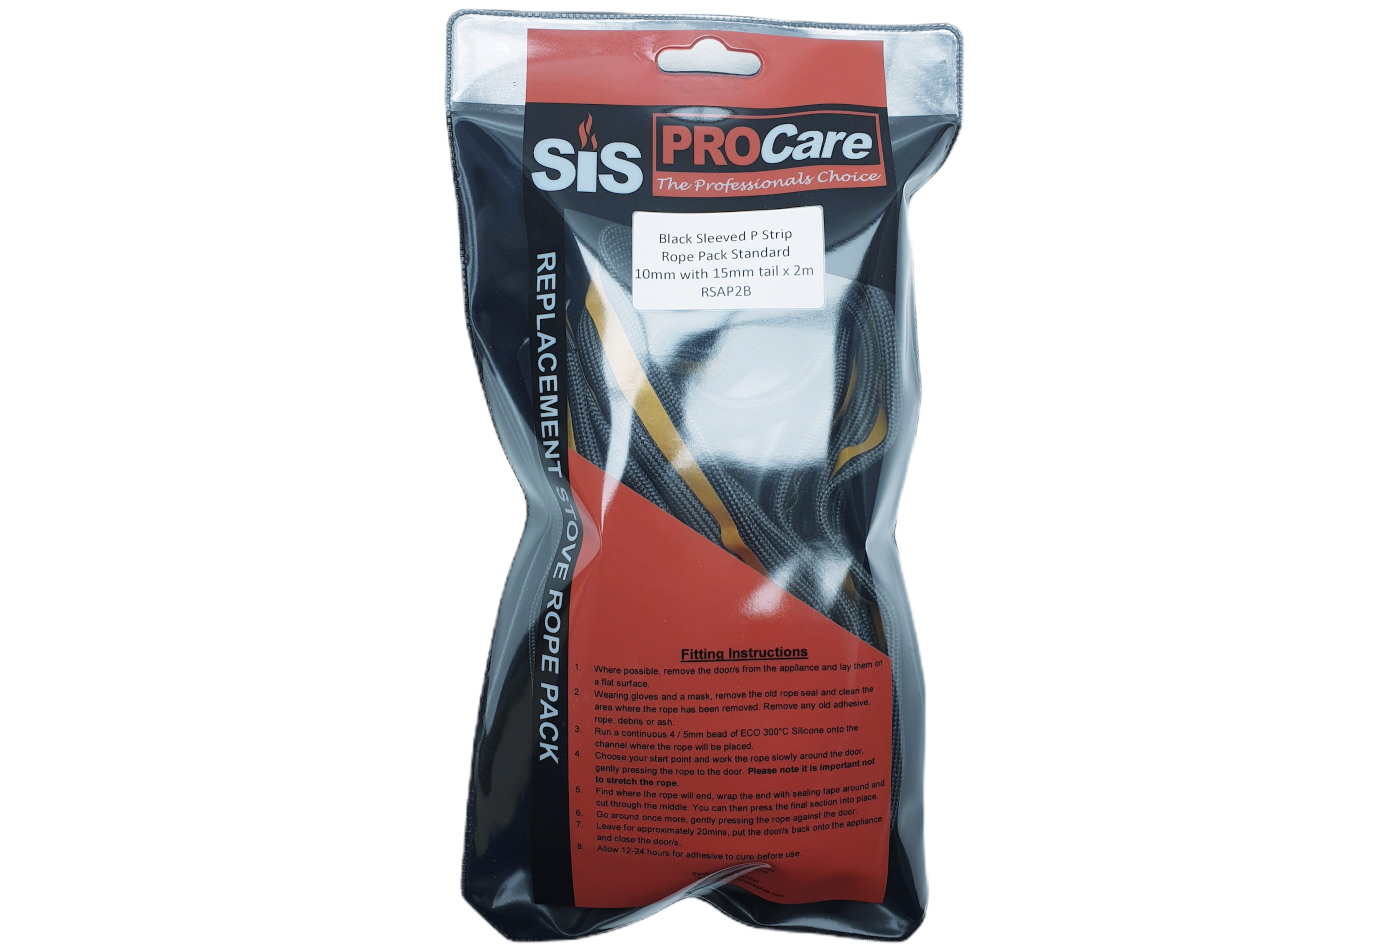 SiS Procare Black 10 milimetre with 15 milimetre Tail Black P Strip 2 metre Stove Rope Pack